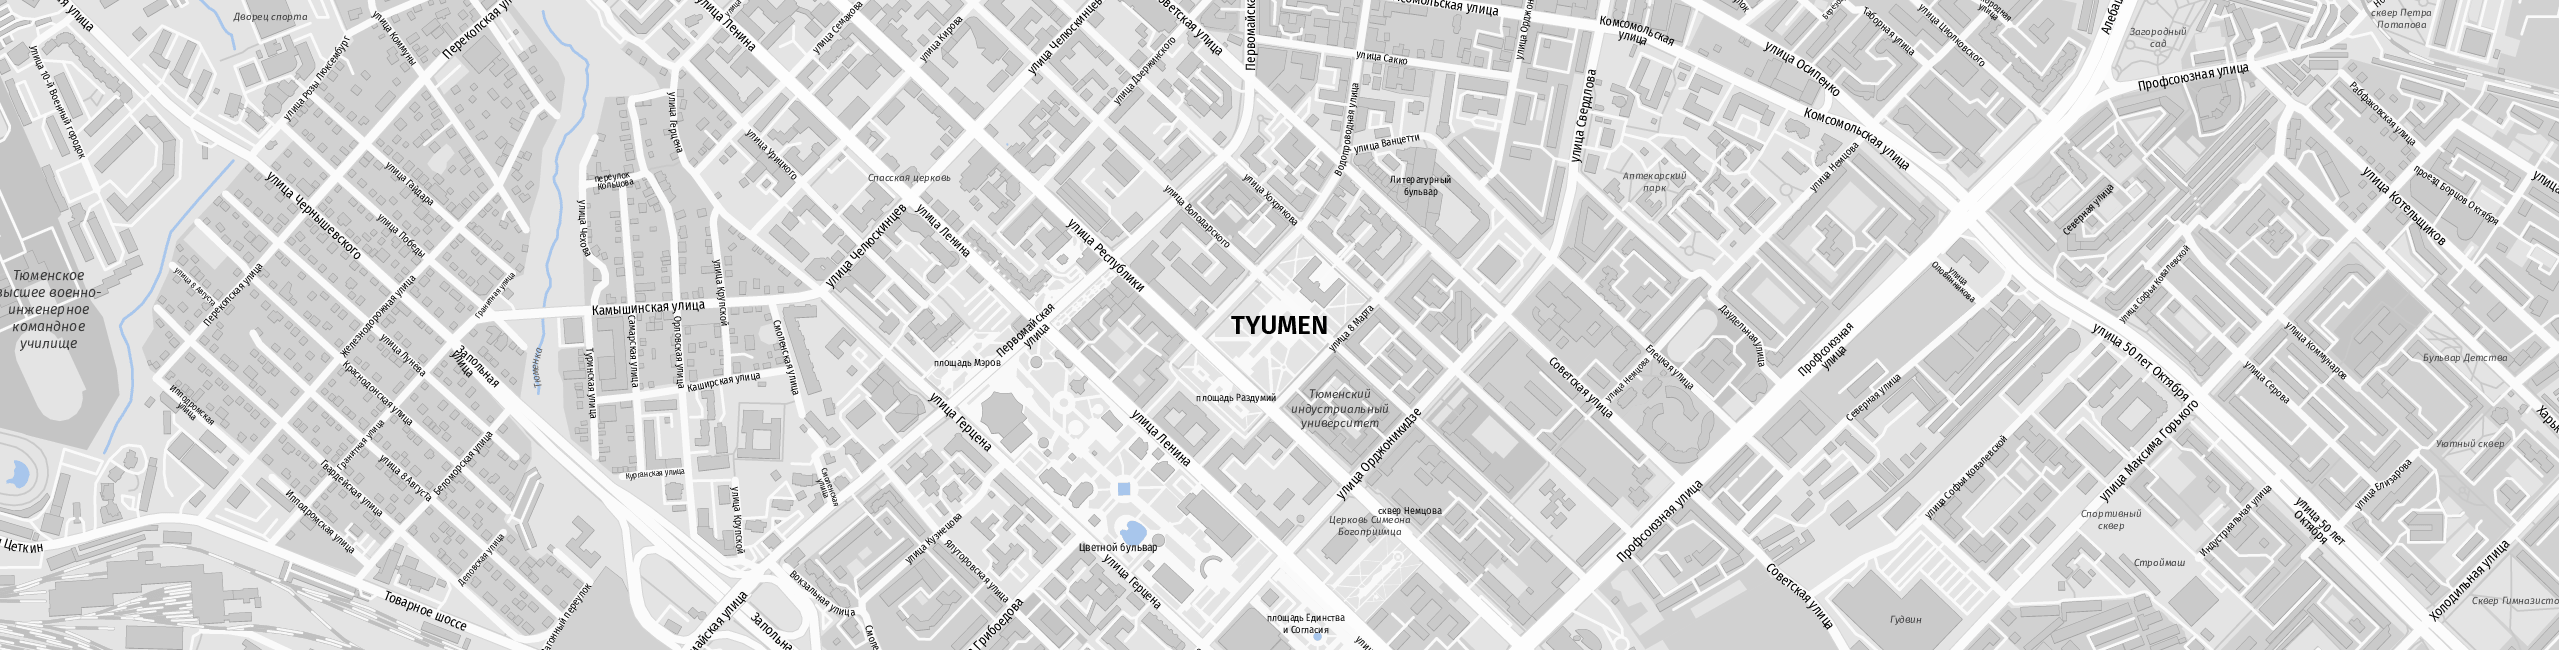 Stadtplan Tyumen zum Downloaden.